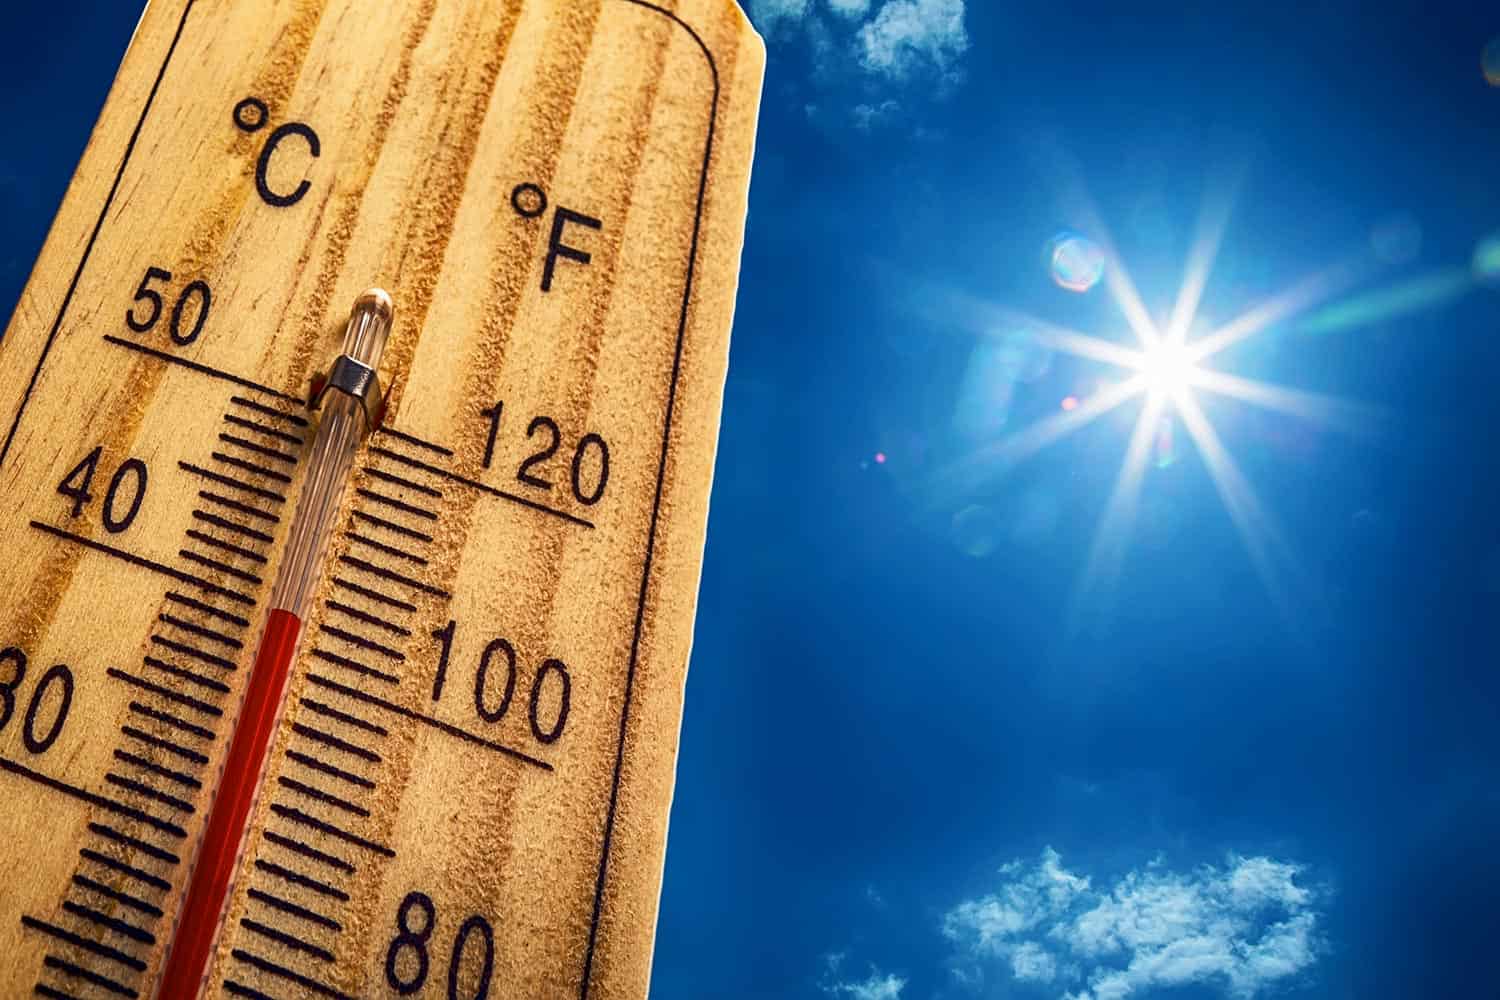 High summer temperatures in degrees celsius and fahrenheit